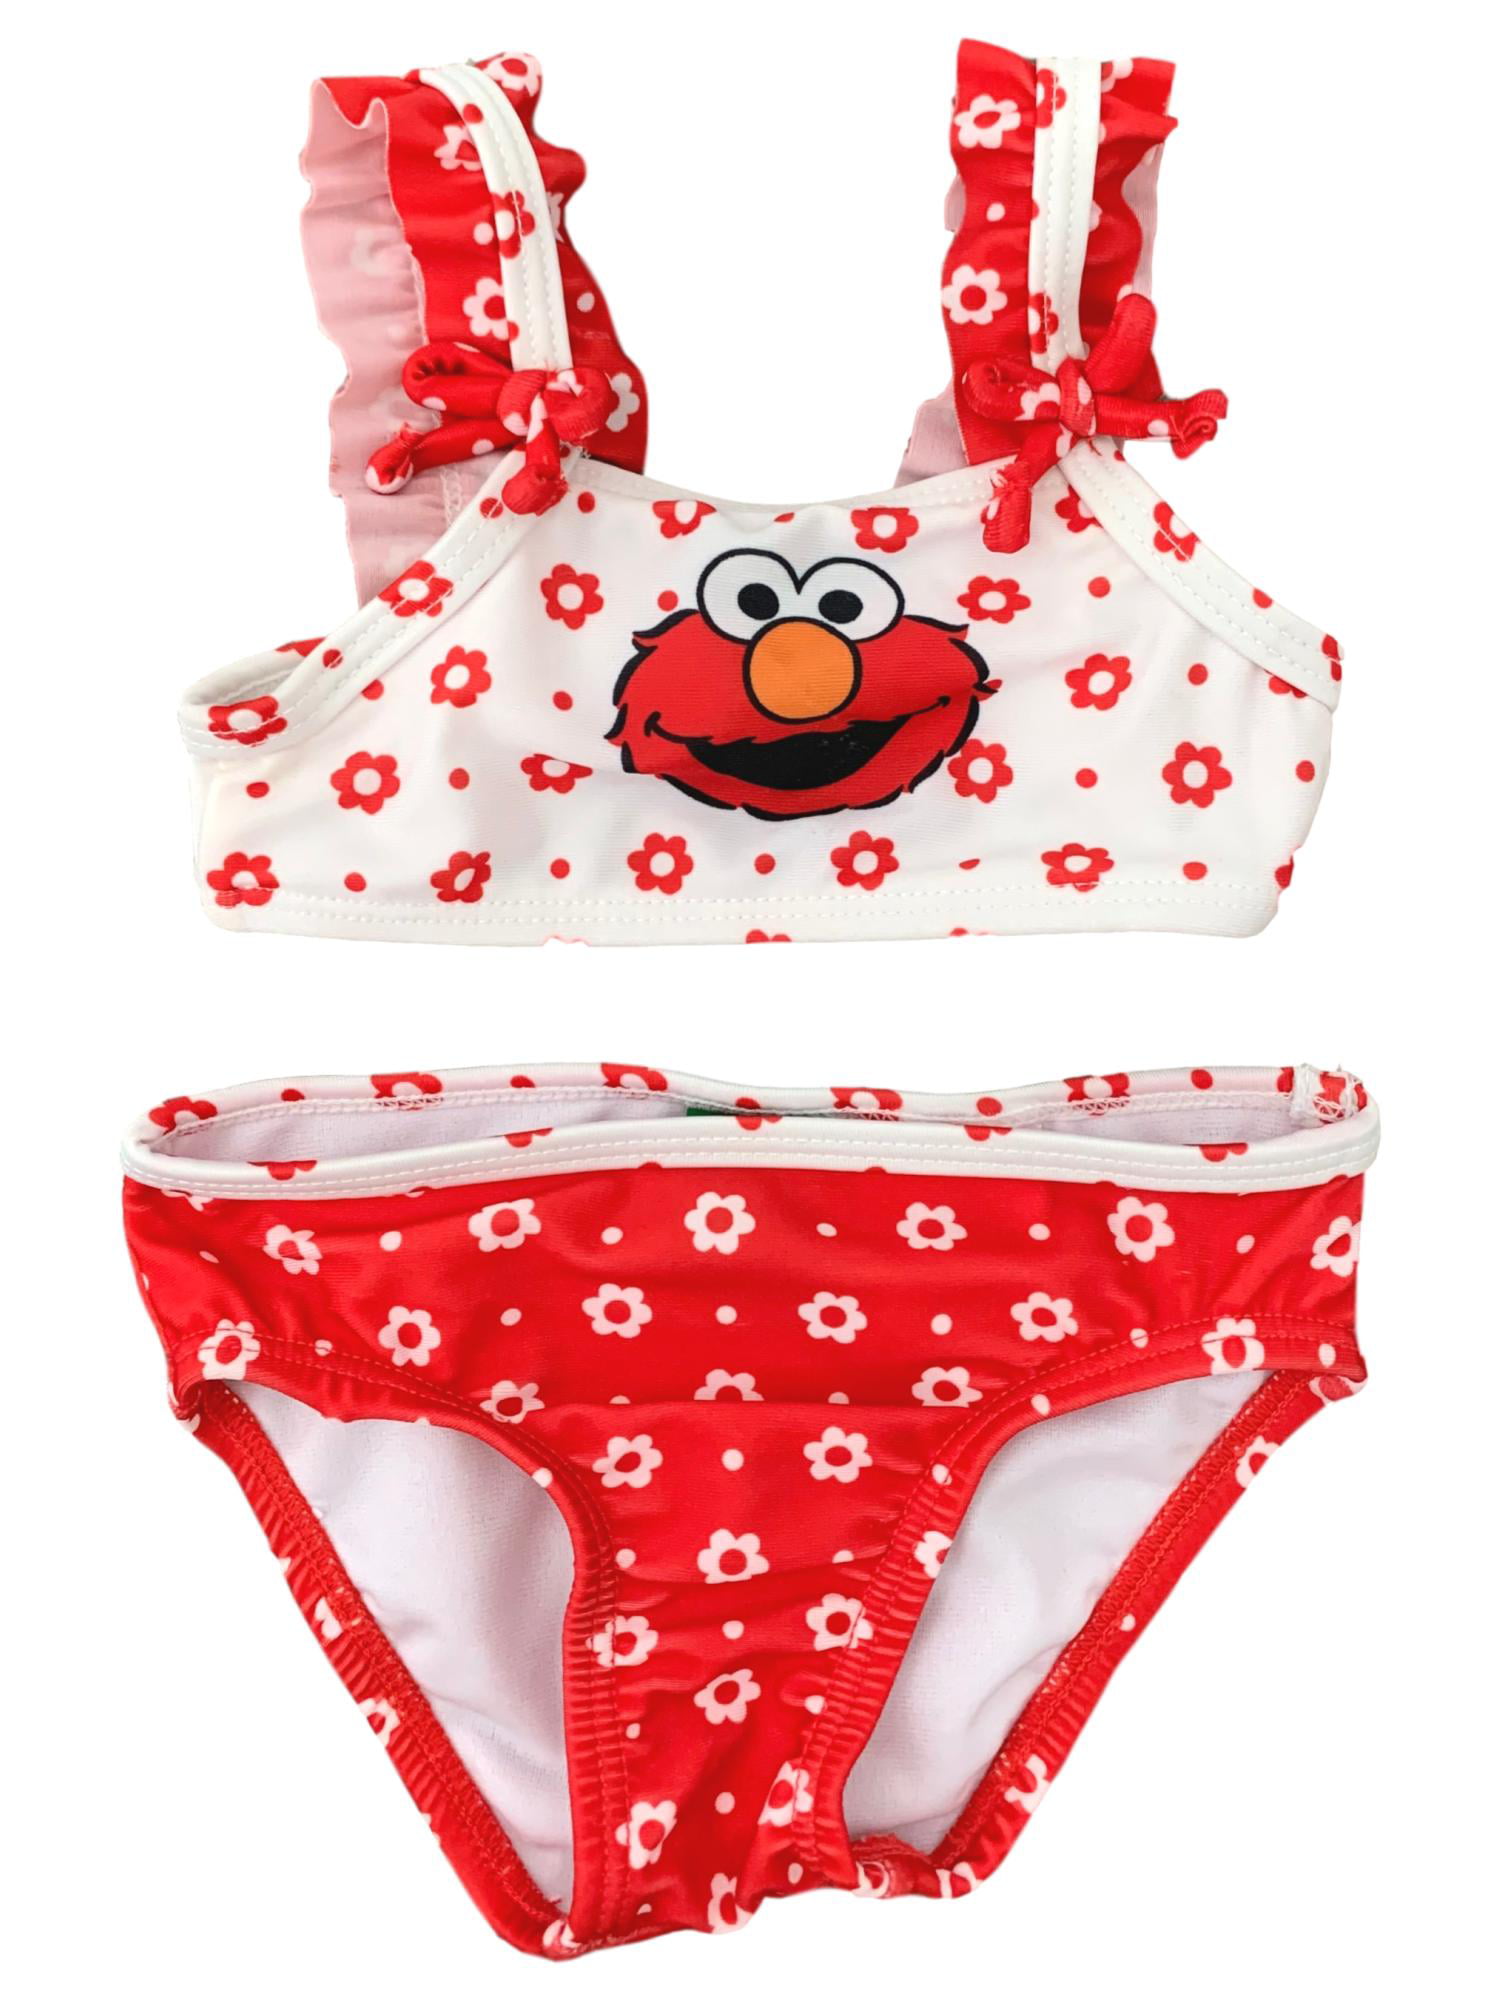 Girls Elmo Sesame Street Swim Suit Two Piece Bathing Suit Size 3-6 Months New